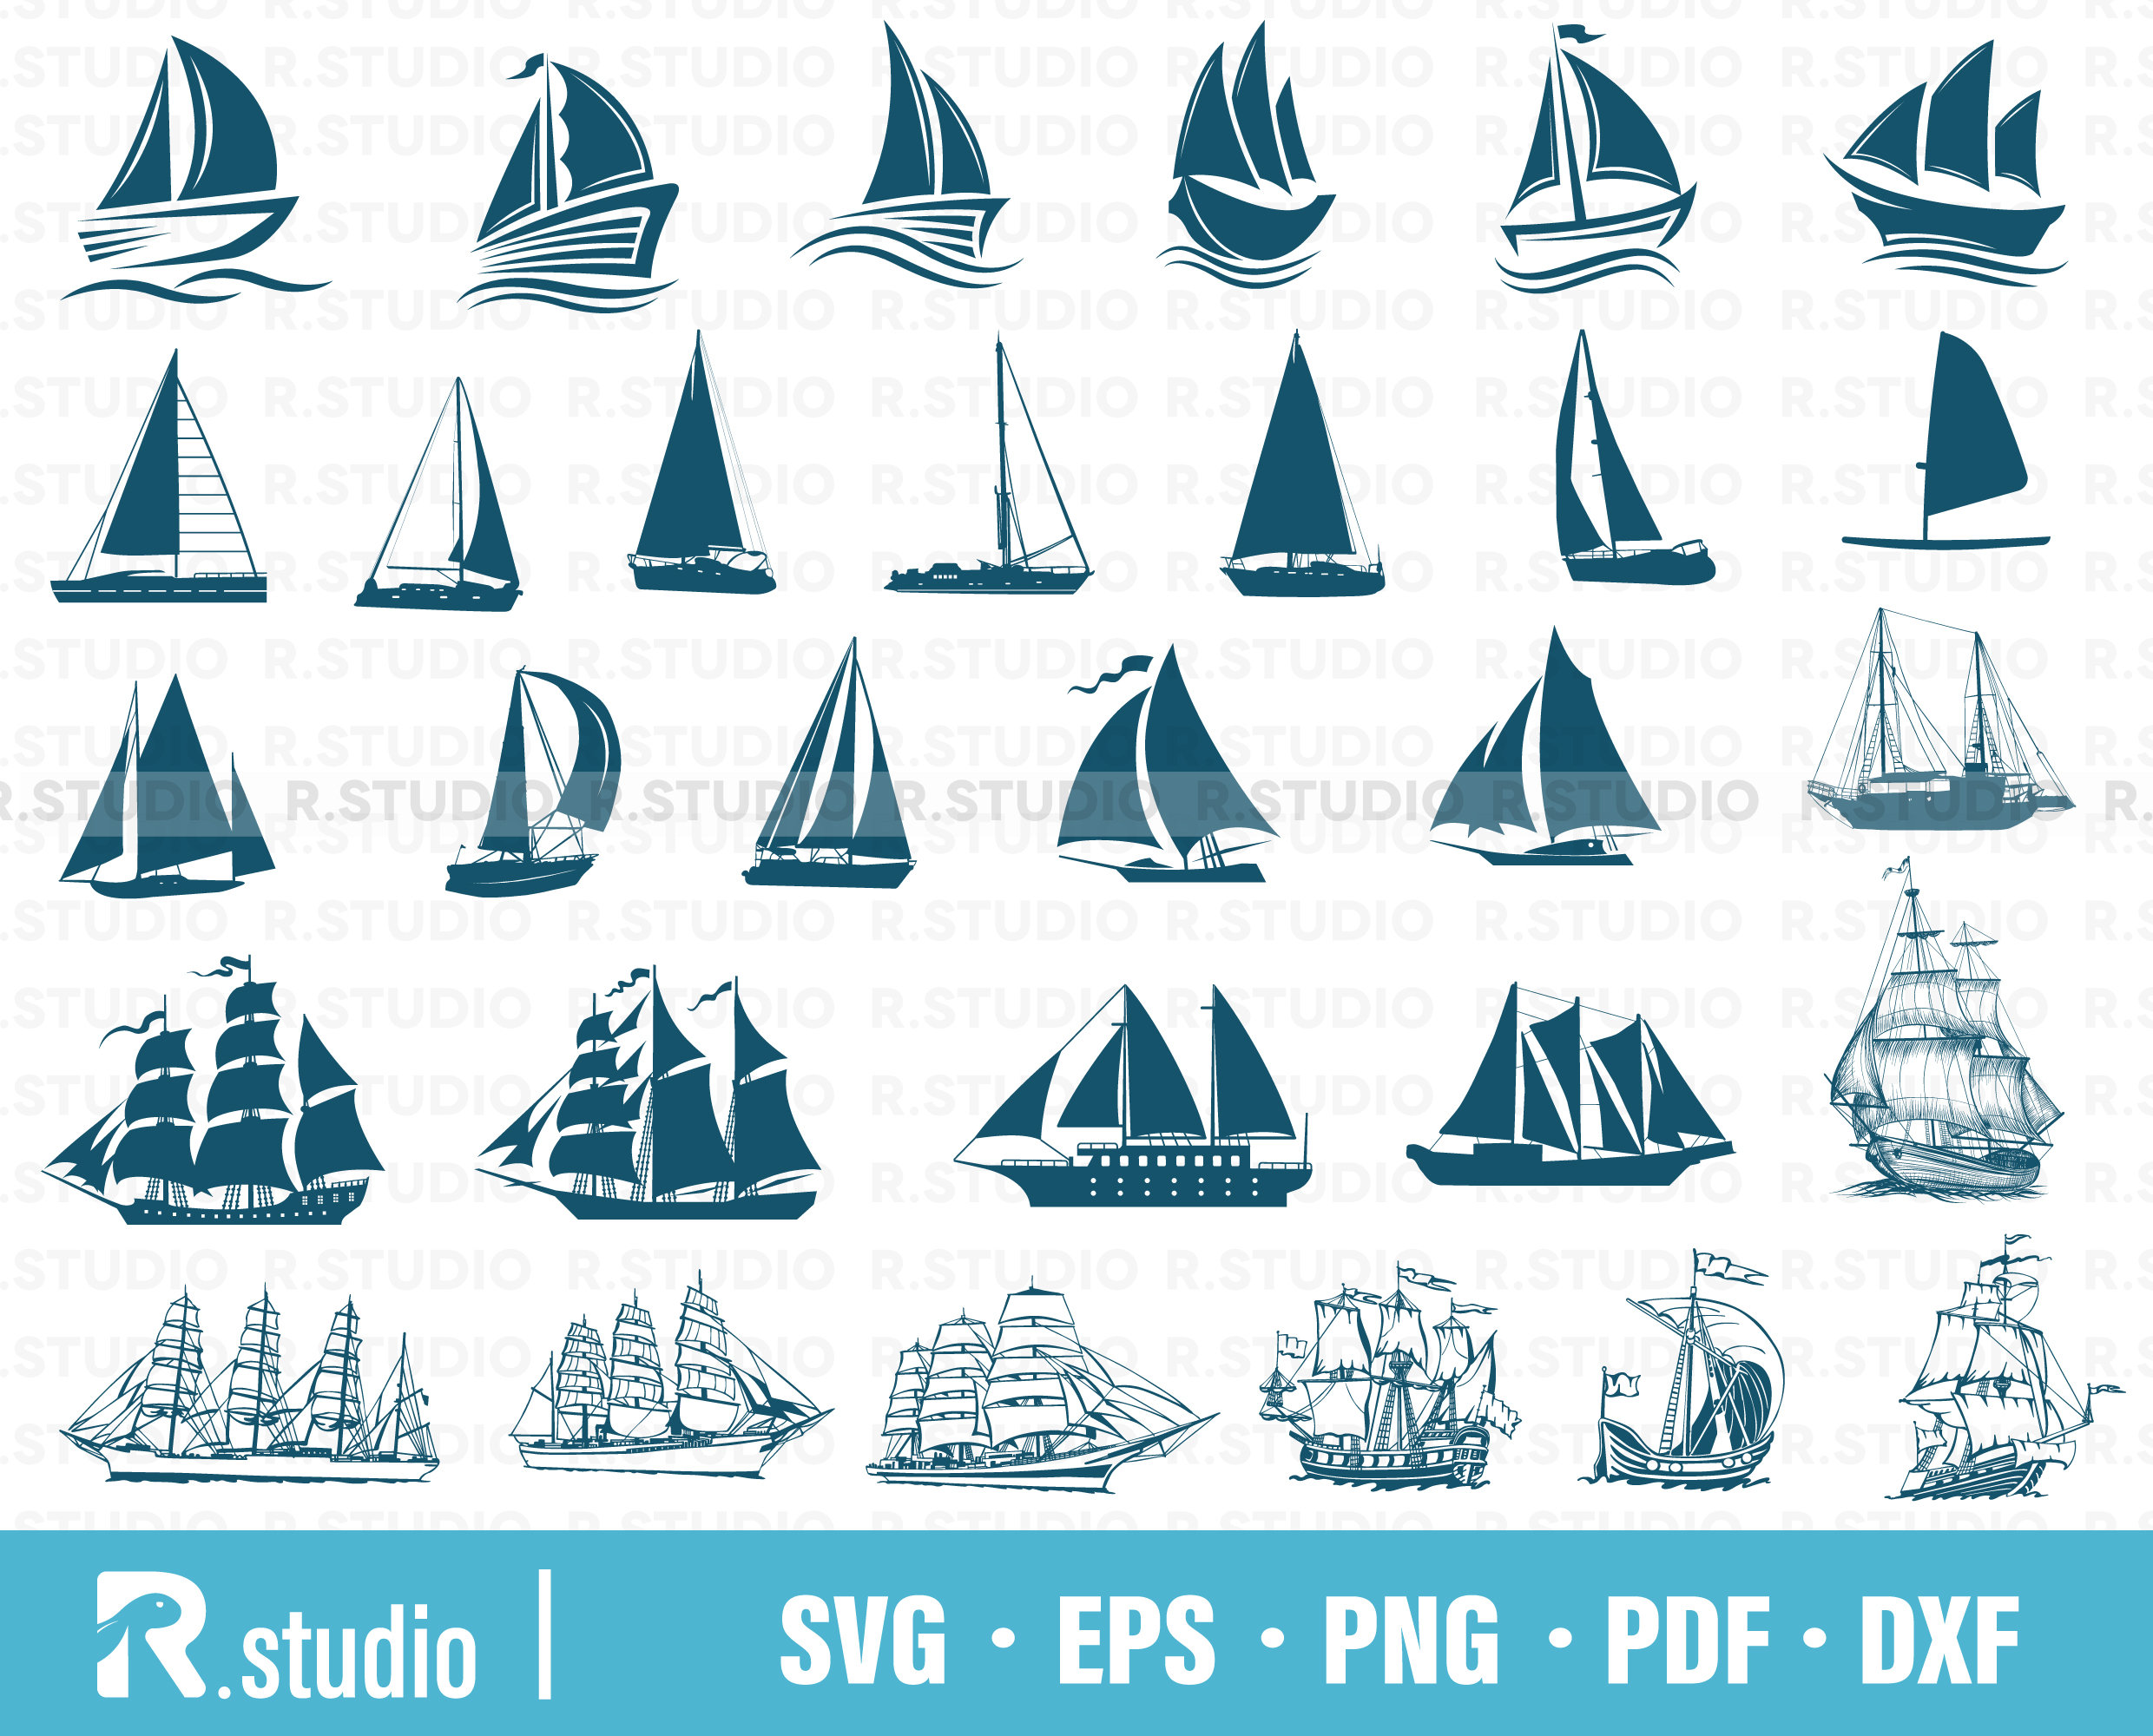 Sailing Boat Sticker - TenStickers